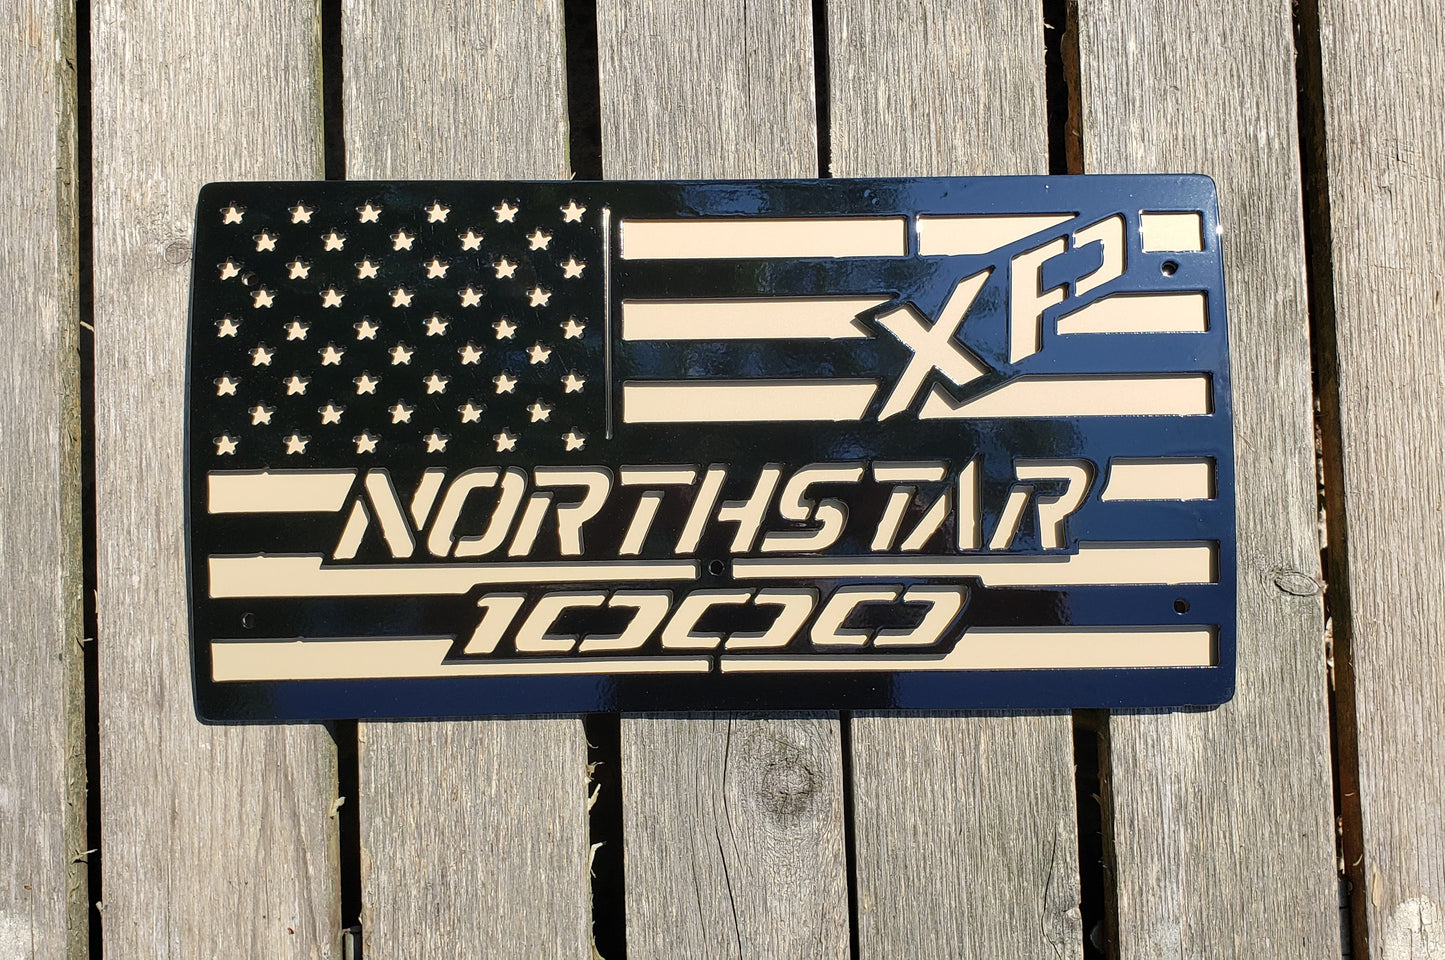 Polaris Ranger Northstar exhaust flag